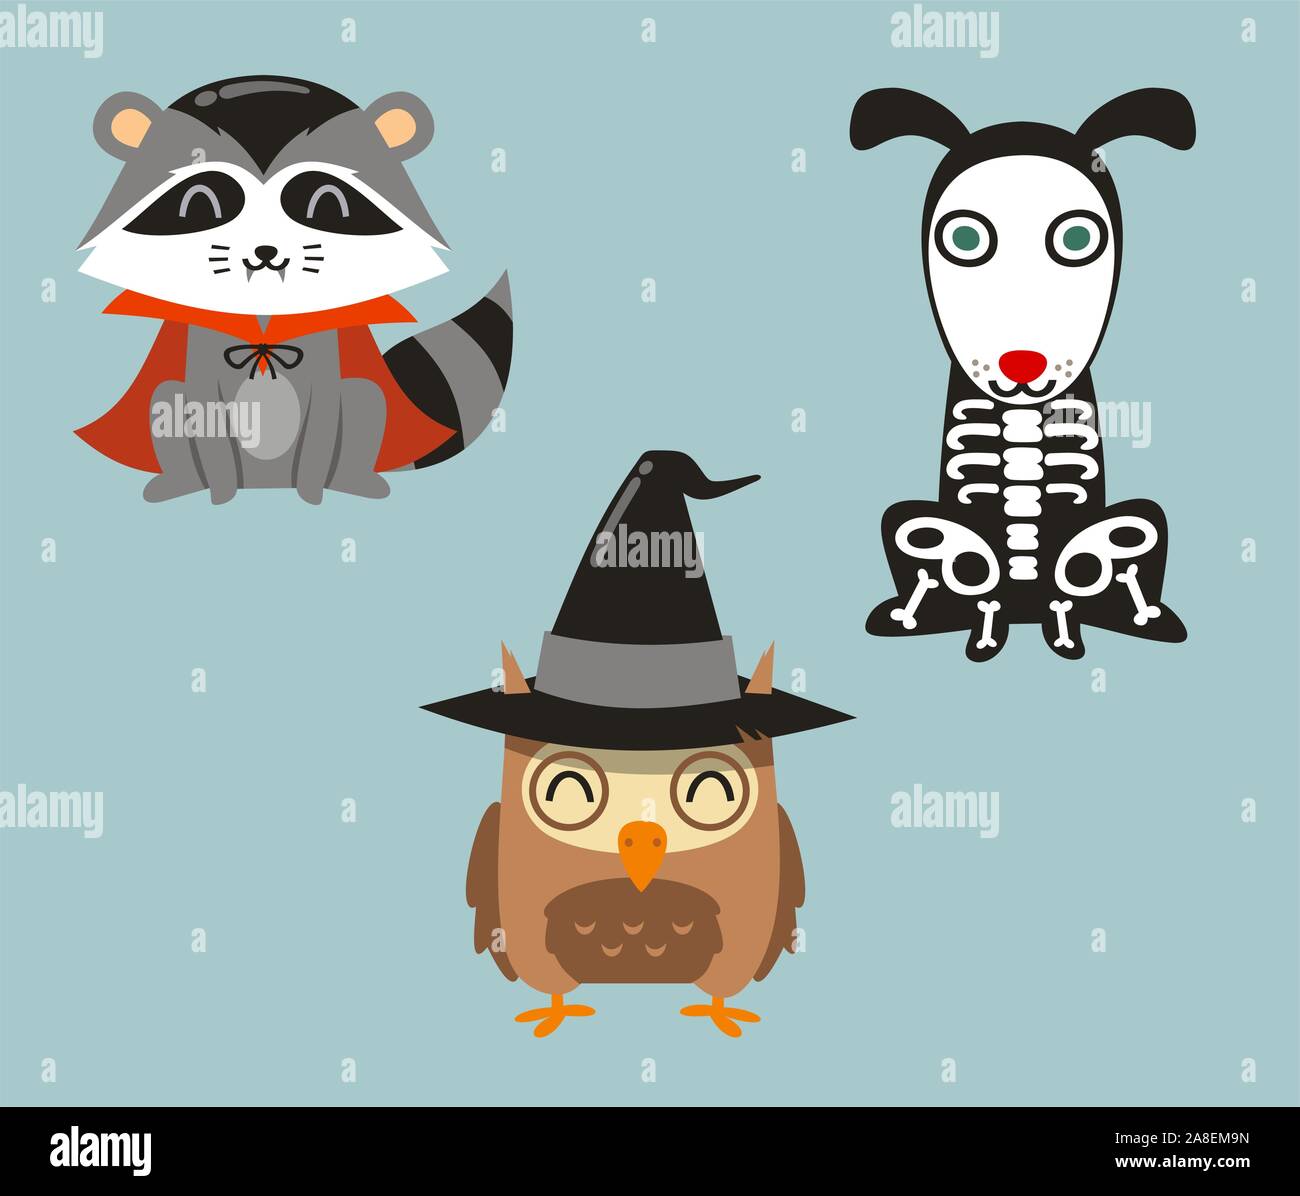 Halloween animals racoon, owl and dog in cartoon costumes Stock Vector